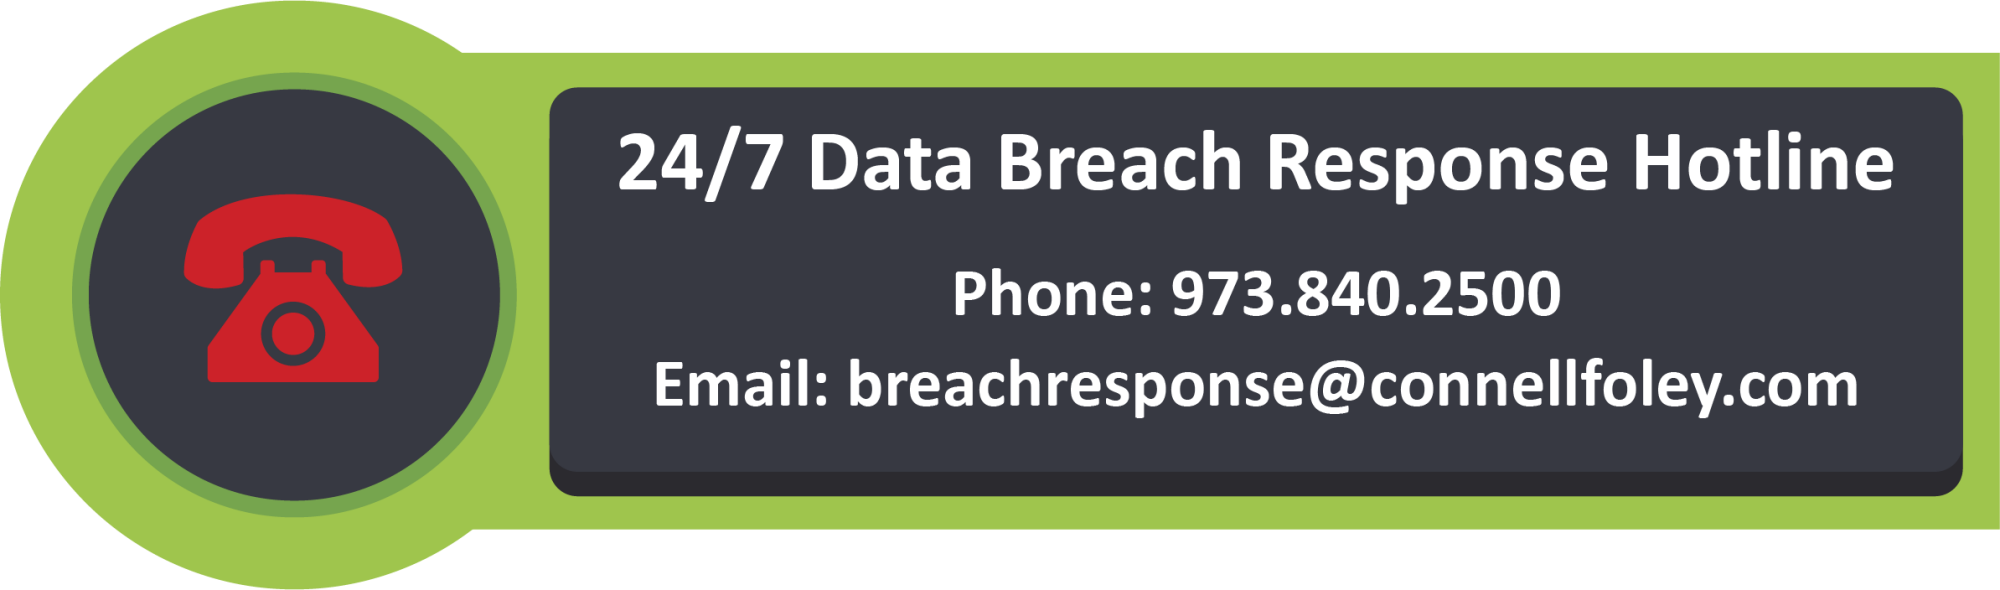 Connell Foley 24/7 Breach Response Hotline